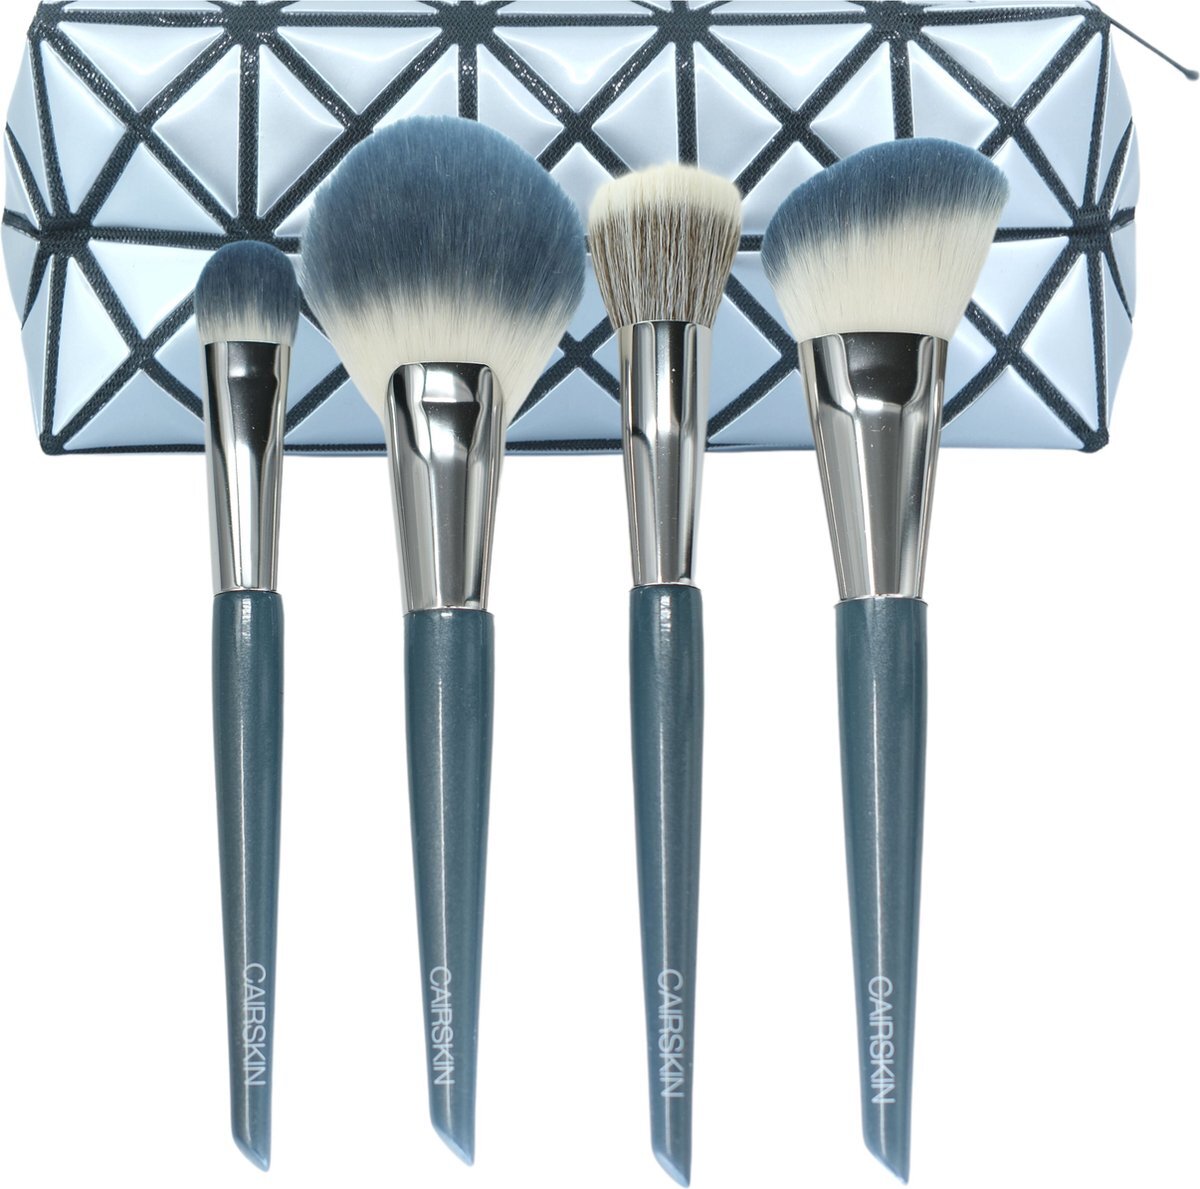 Cairskin Cadet Blue Brush Set - 4 Classic Face Bushes for Professional Makeup - Visagie Kwastenset voor Gezicht & Ogen - Inclusief Beauty Bag